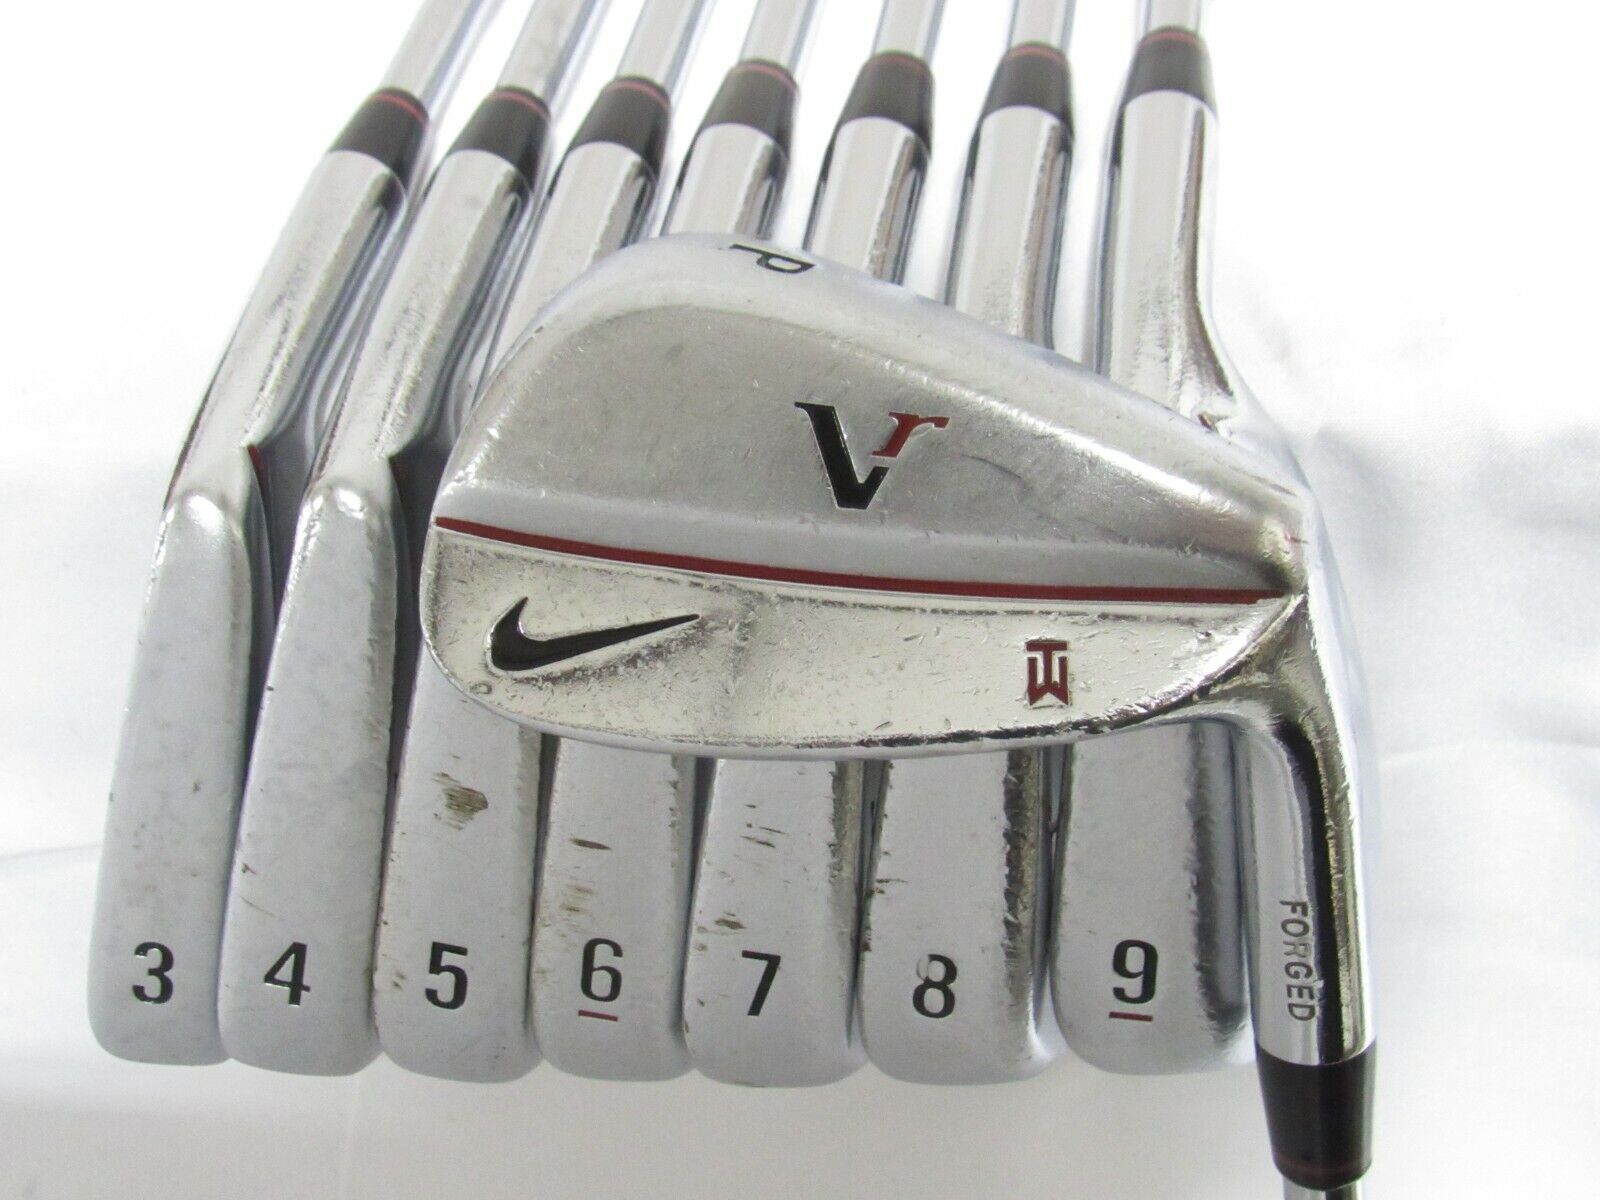 Used RH Nike Vr Tiger Woods Forged Iron Set 3-P Regular Flex Steel Shafts